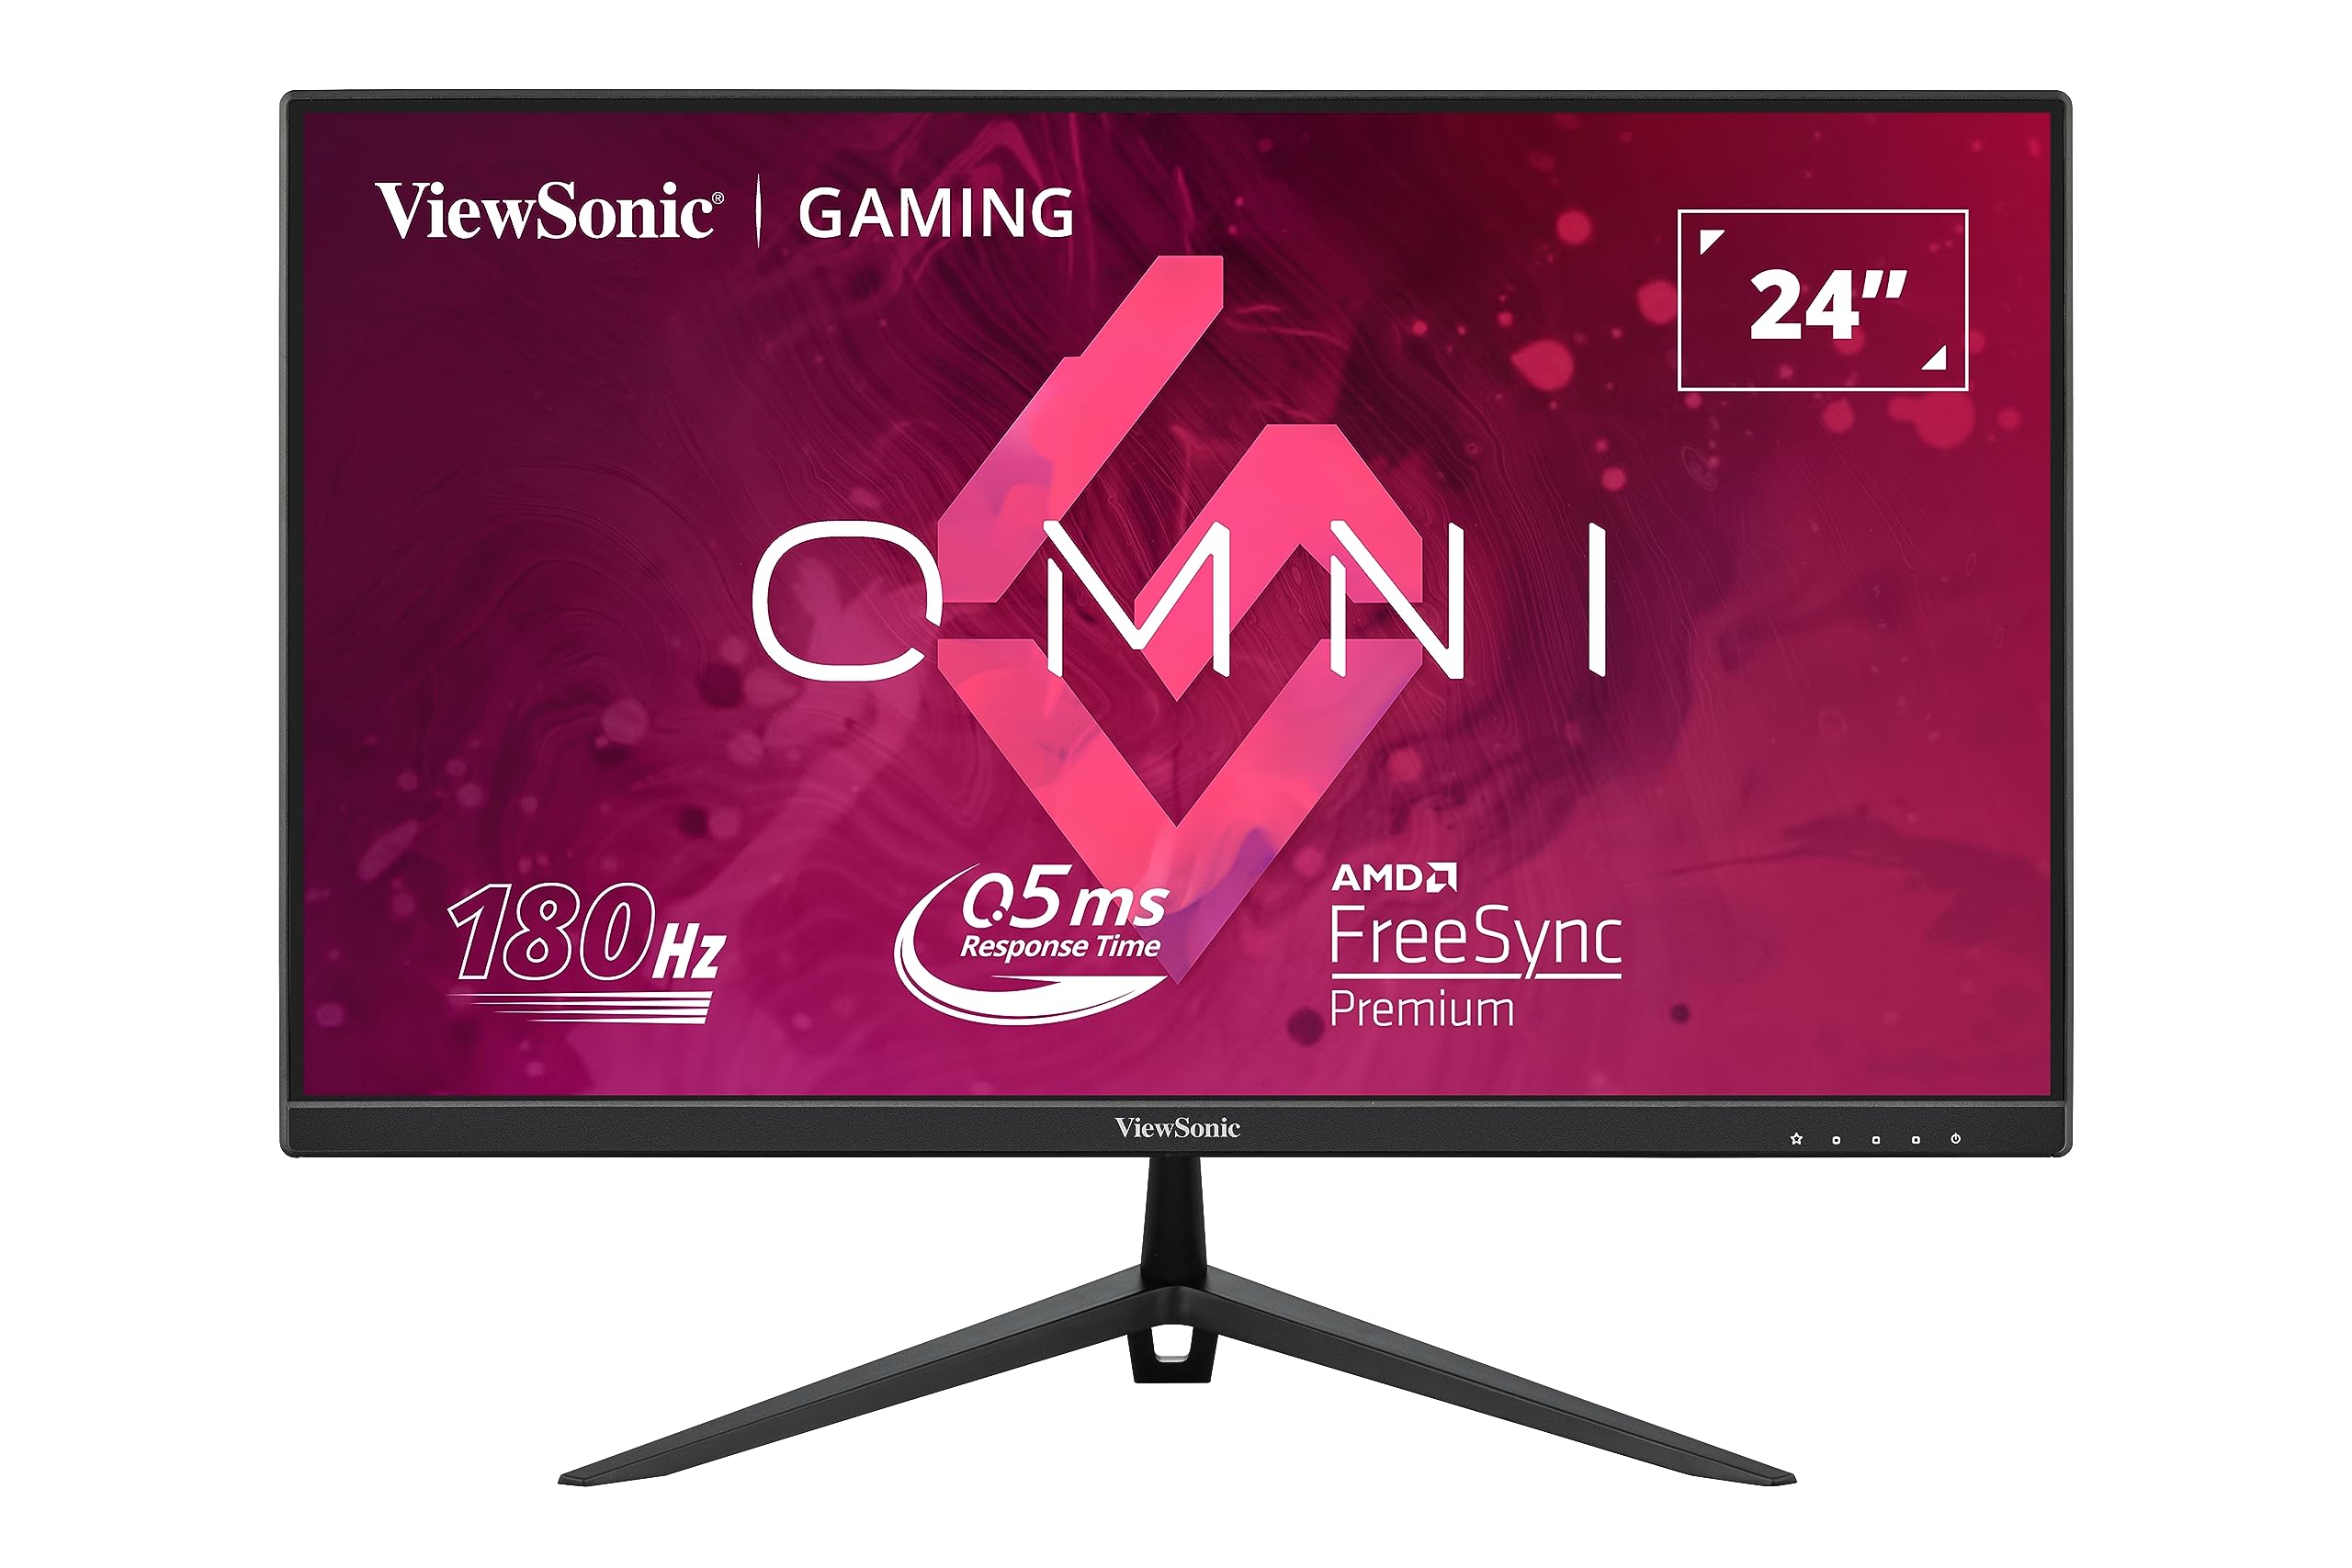 ViewSonic Omni VX2428 24 Inch Gaming Monitor 165hz 0.5ms 1080p IPS with FreeSync Premium, Frameless, HDMI, DisplayPort, Black